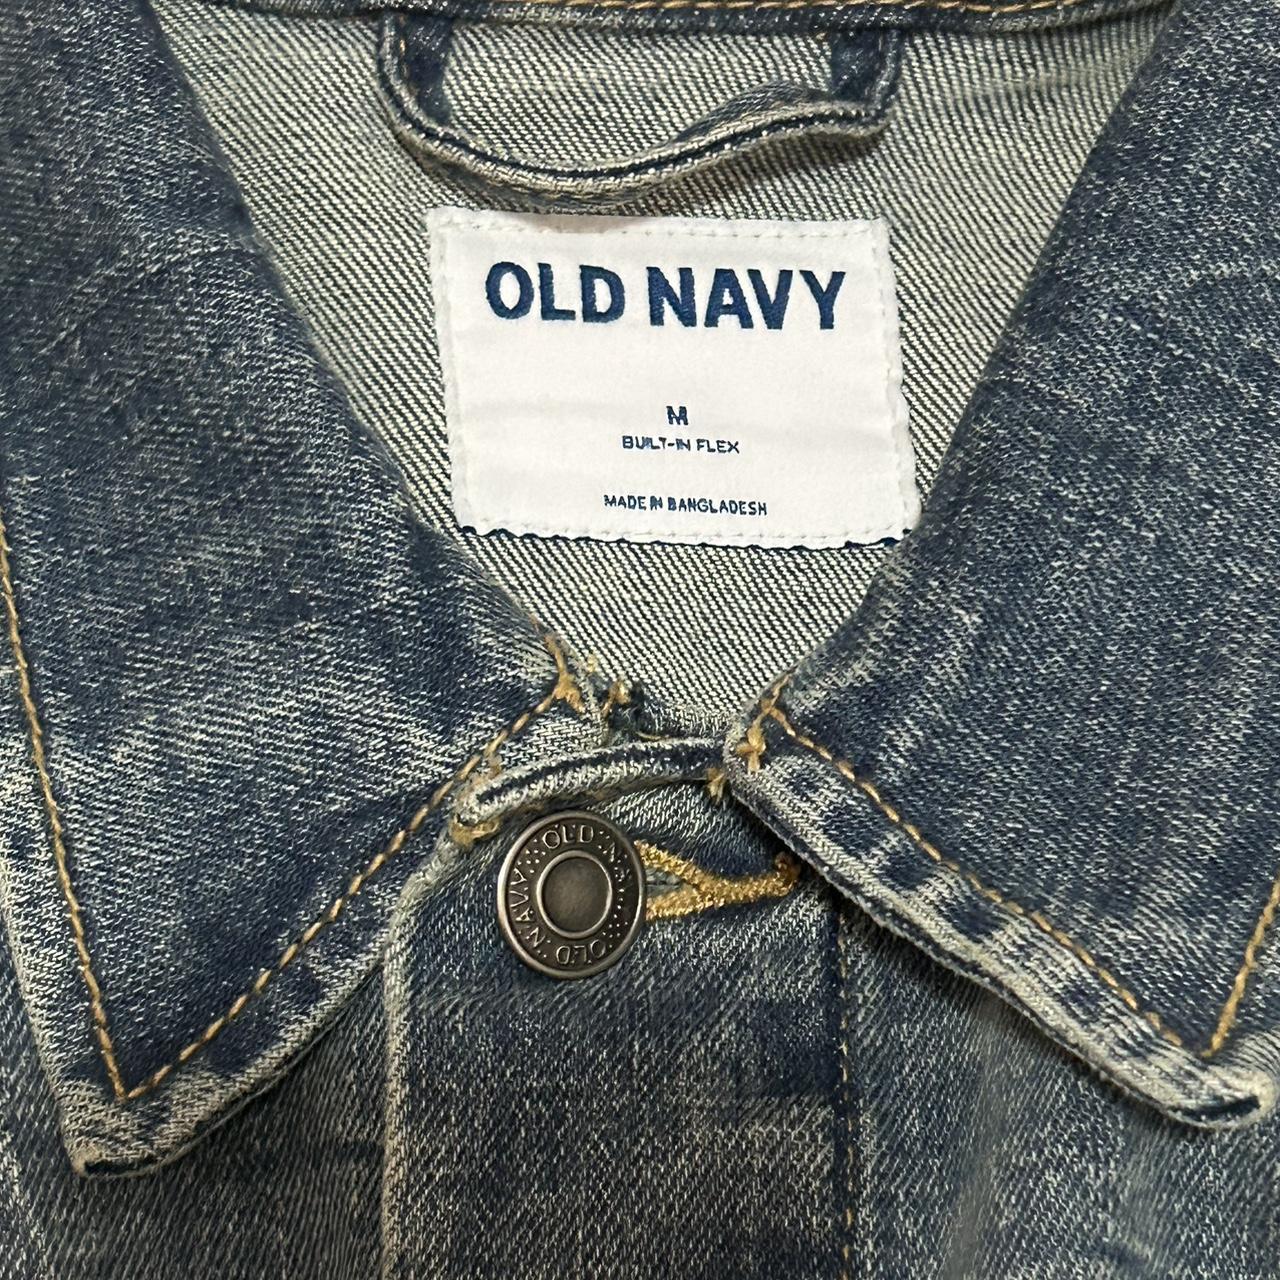 Old Navy Men's Distressed Built-in Flex Jean Jacket - Blue - Size M